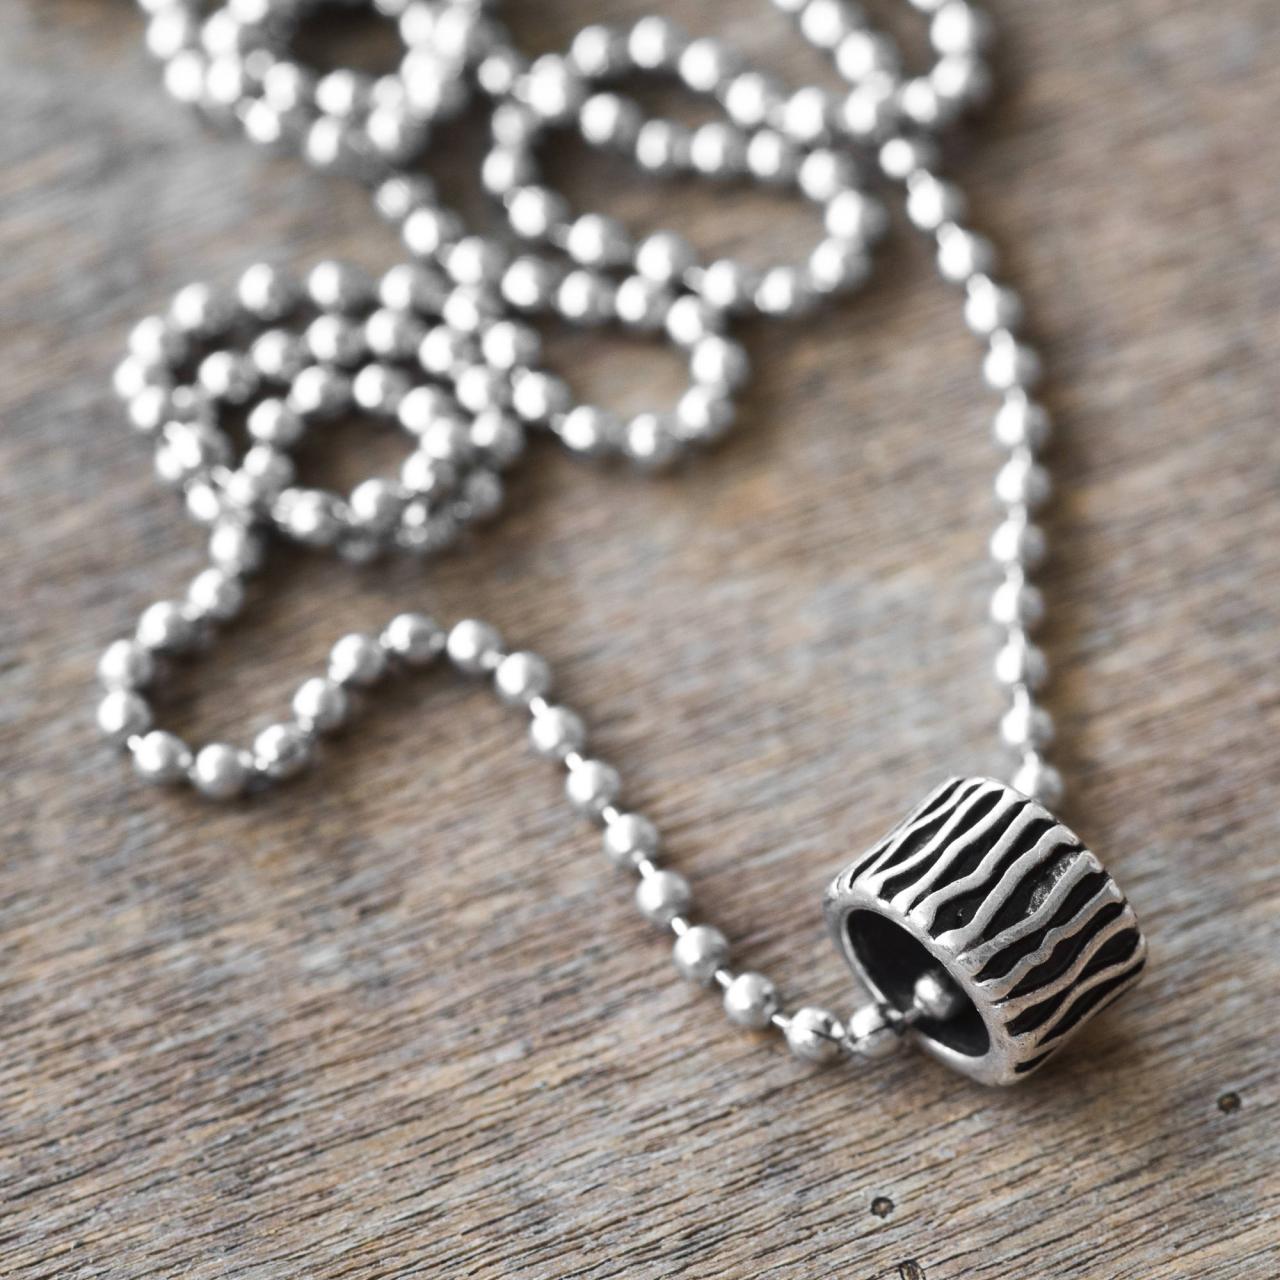 Men's Necklace - Men's Silver Necklace - Men's Bead Necklace - Men's Jewelry - Men's Gift -